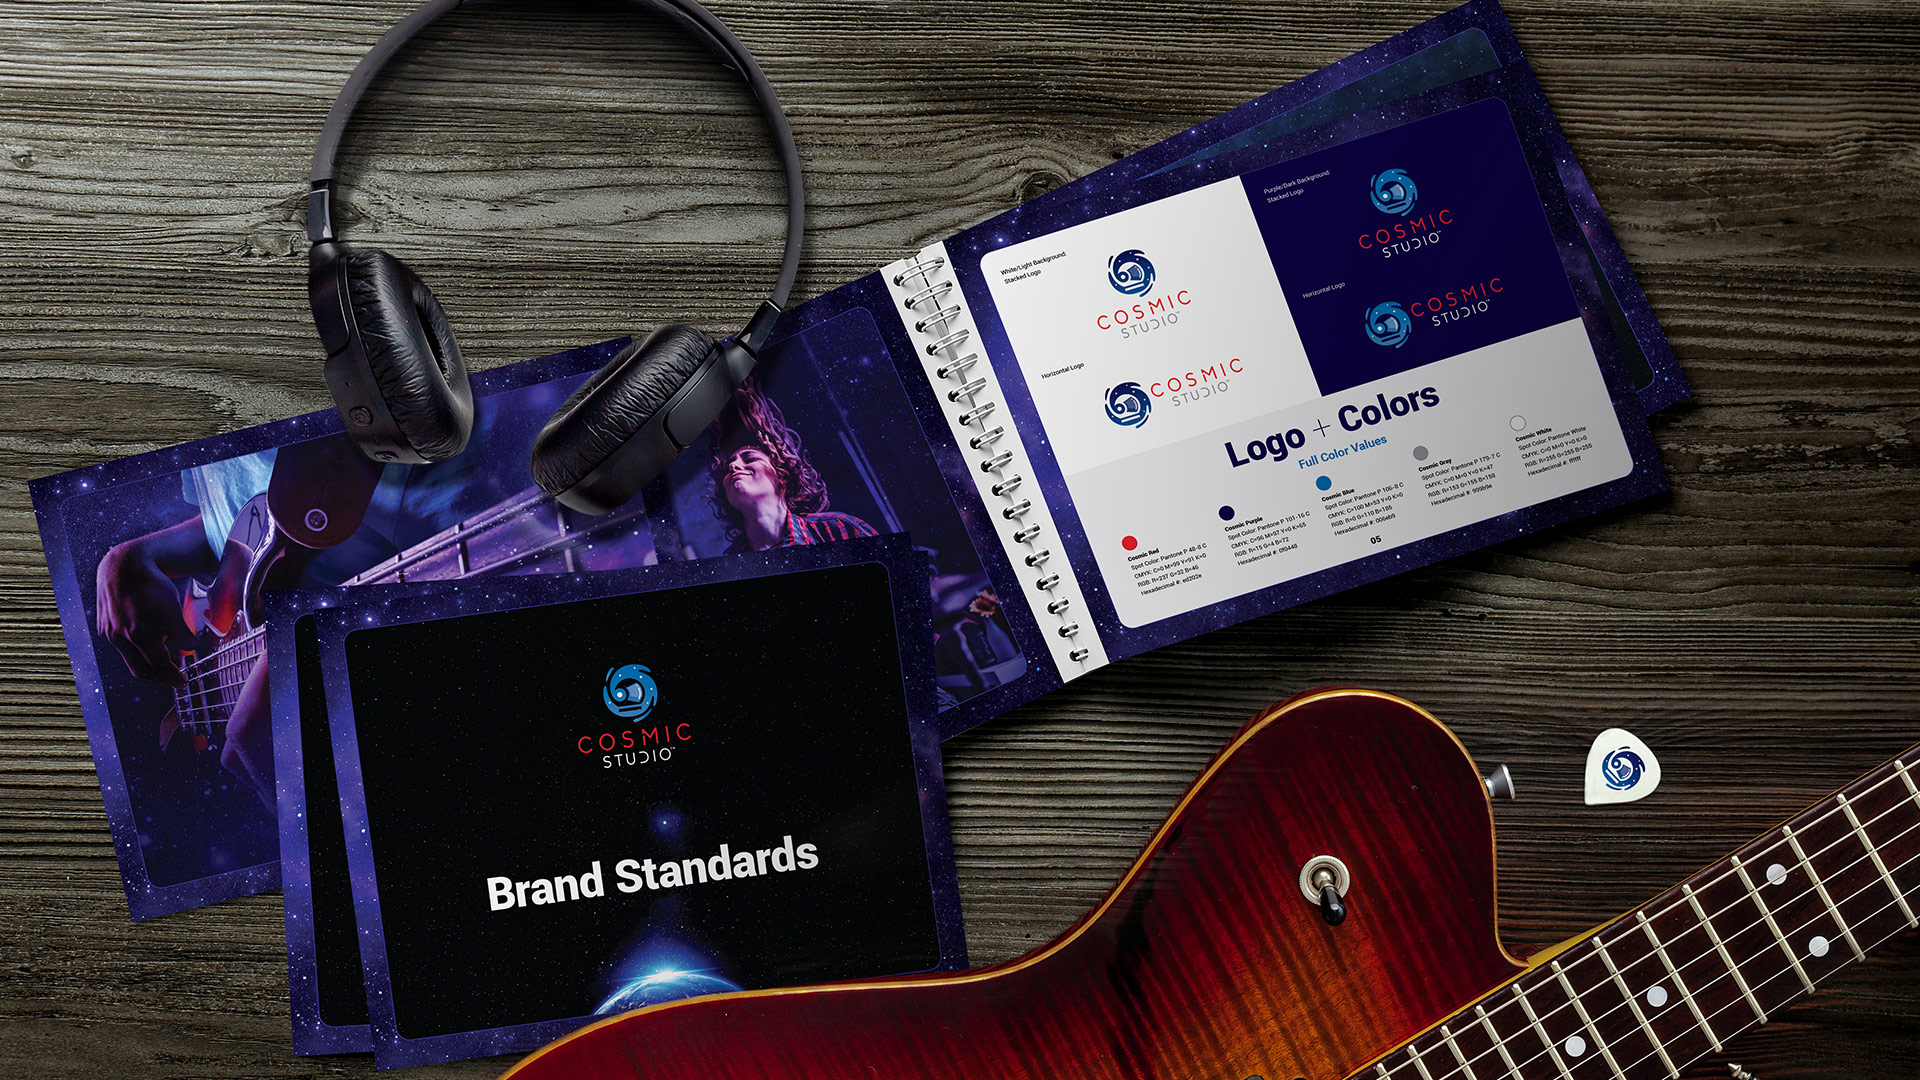 Cosmic Studio Brand Standards